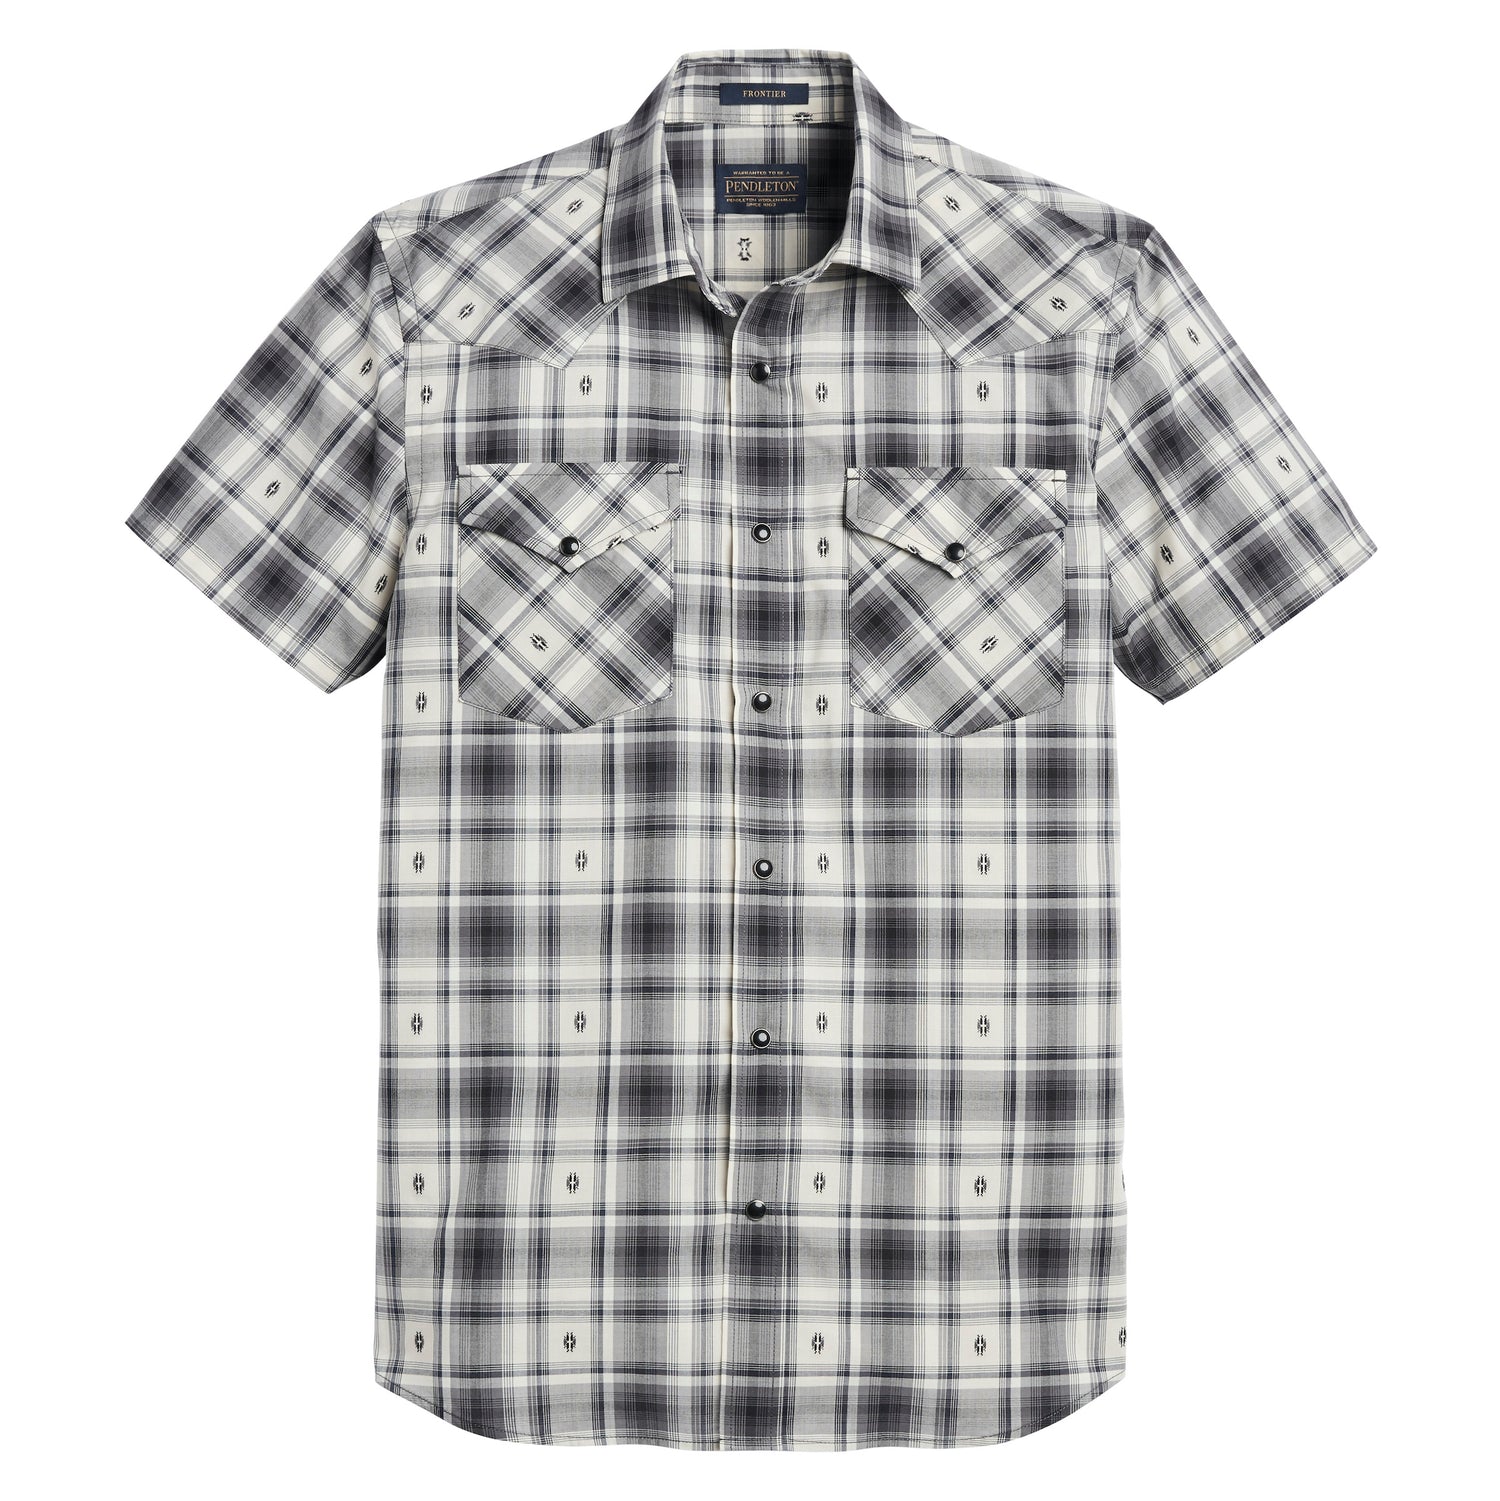 S/S Frontier Shirt - Black Ombre